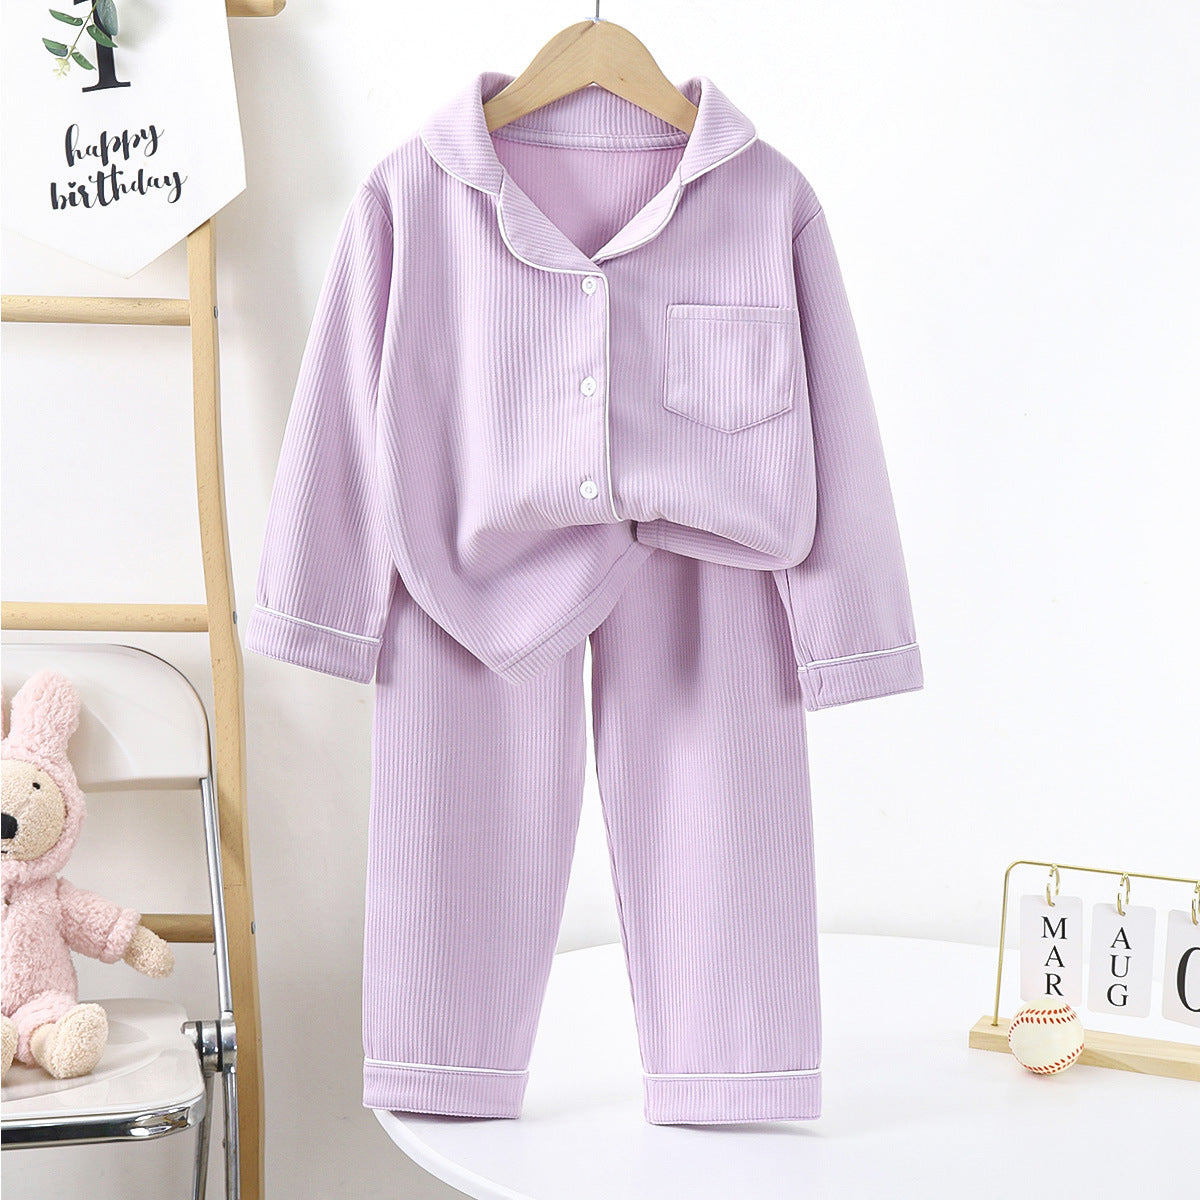 [703121-Girls] - Setelan Baju Tidur Kemeja Polos Import Anak Cewek - Motif Bright Plain